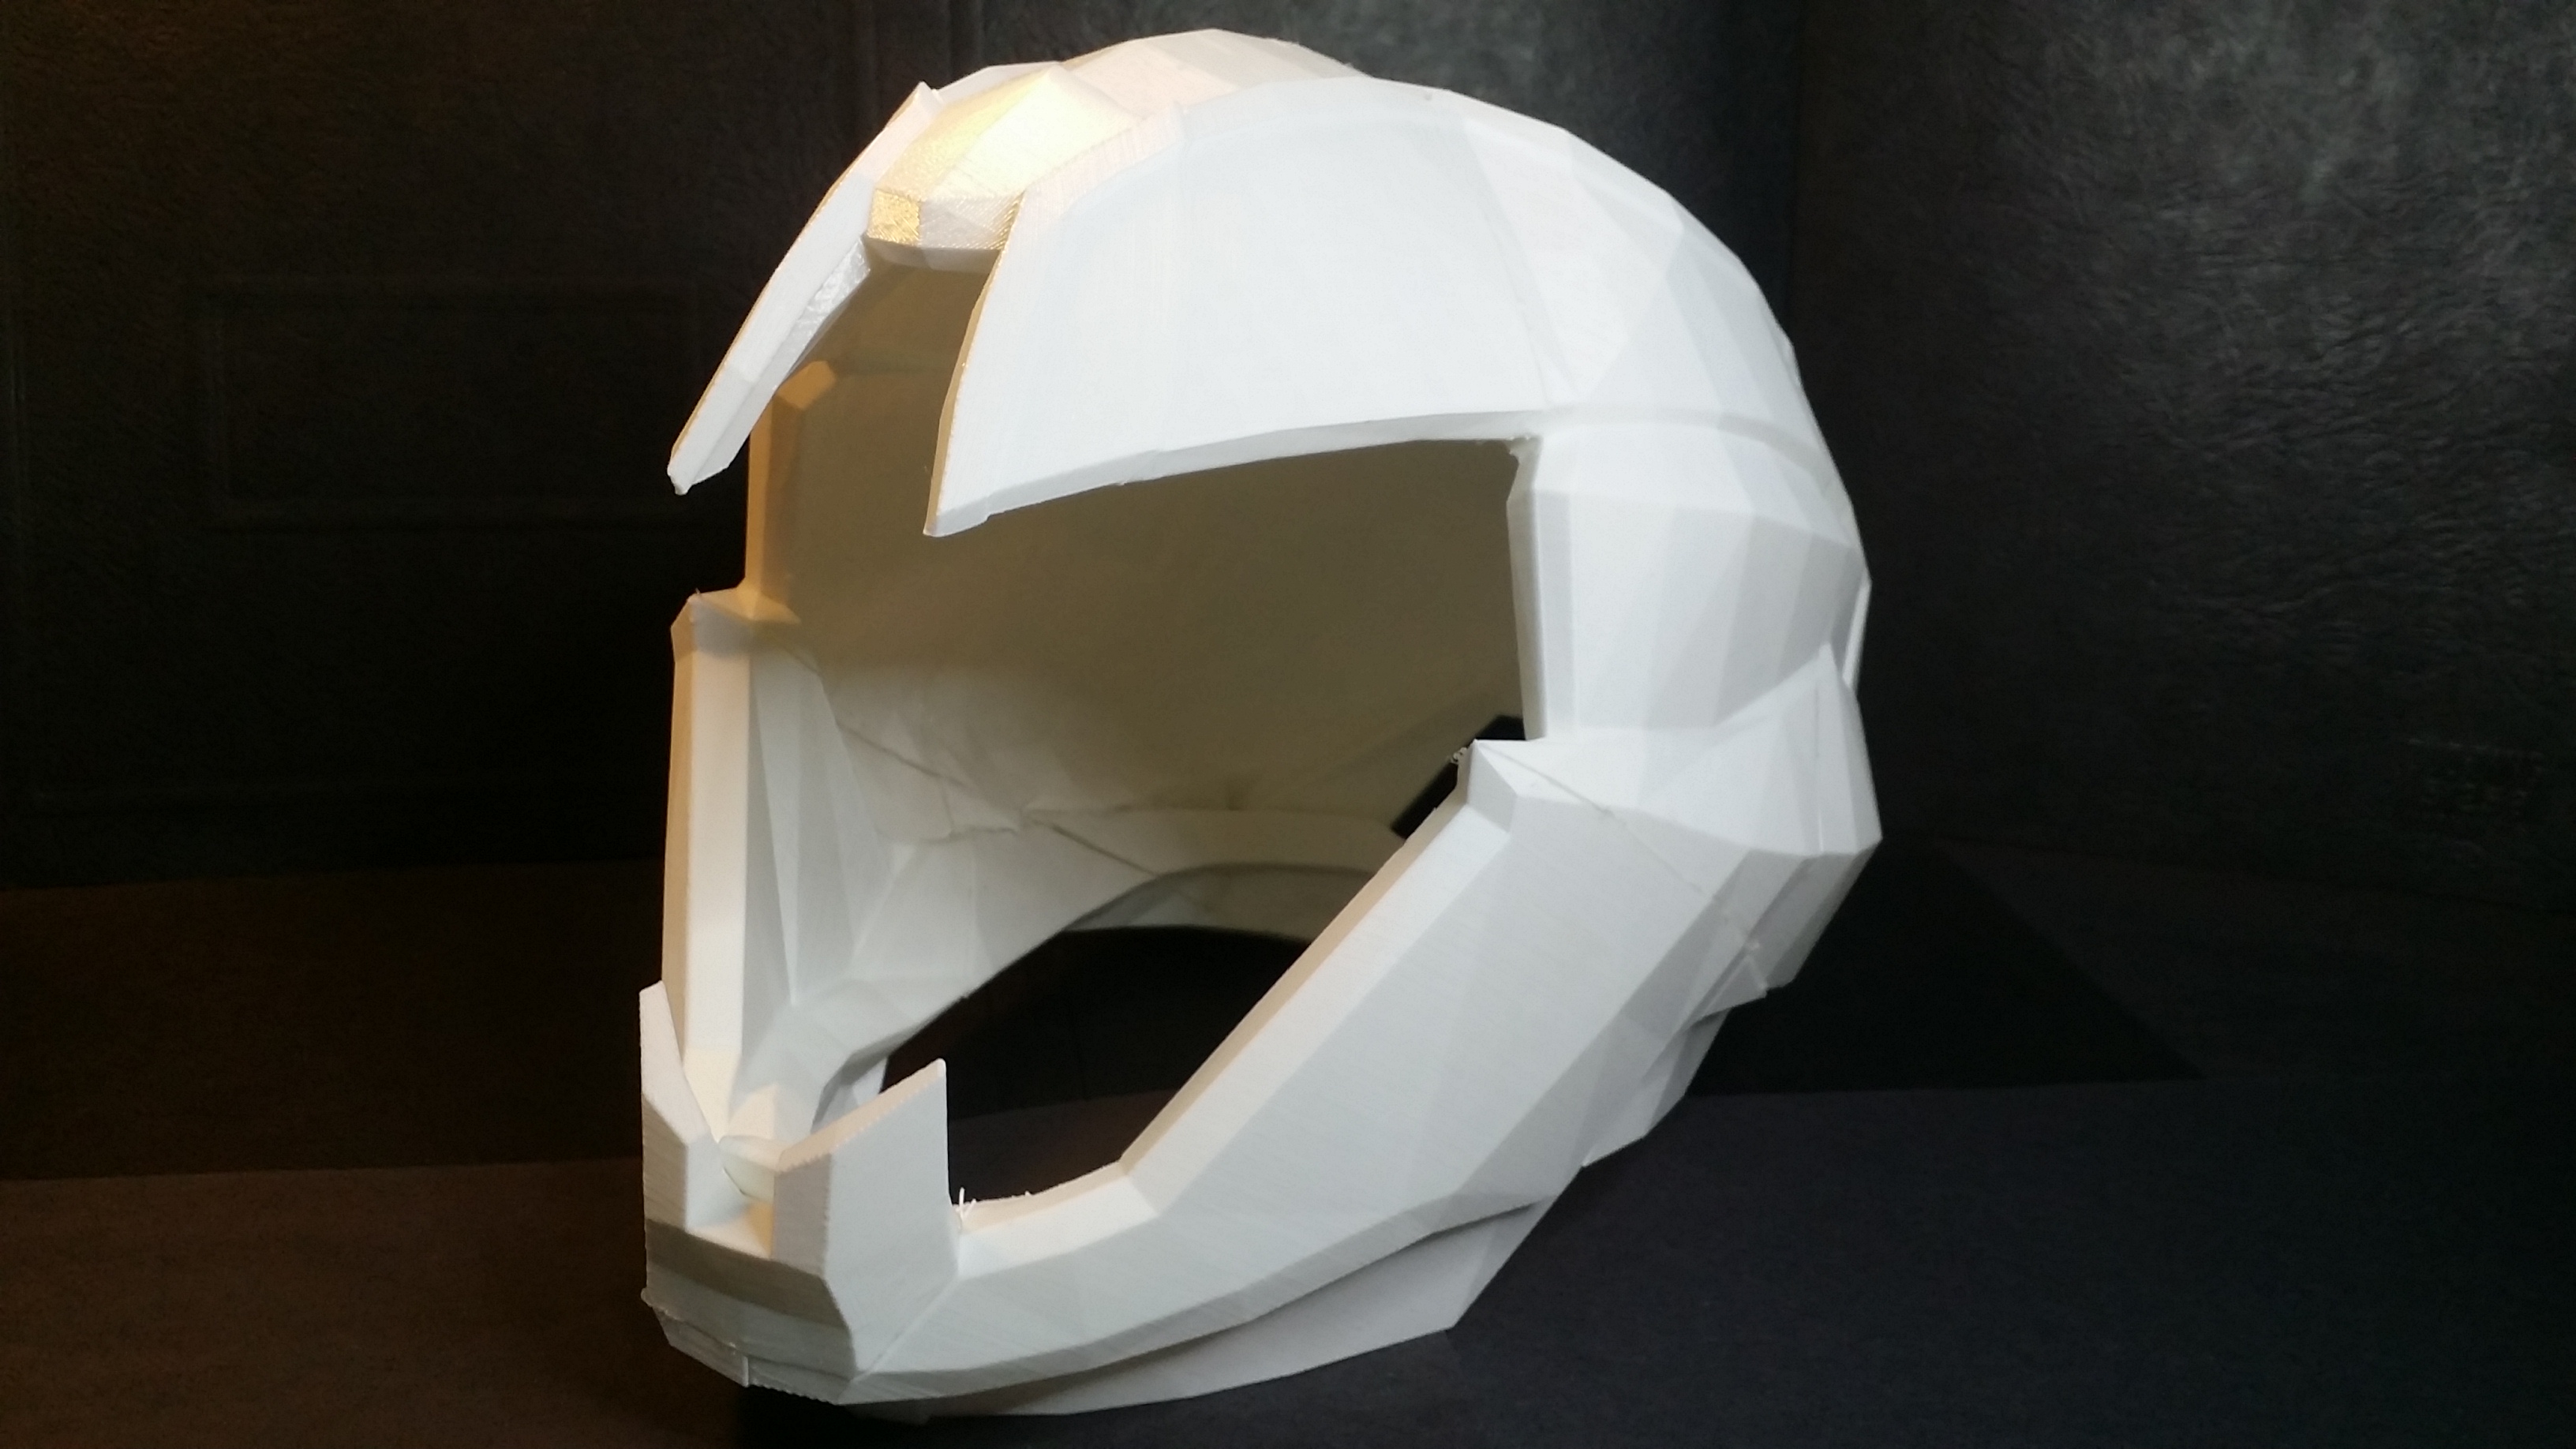 Wearable Graviton Forfeit Hunter Helmet From Destiny.